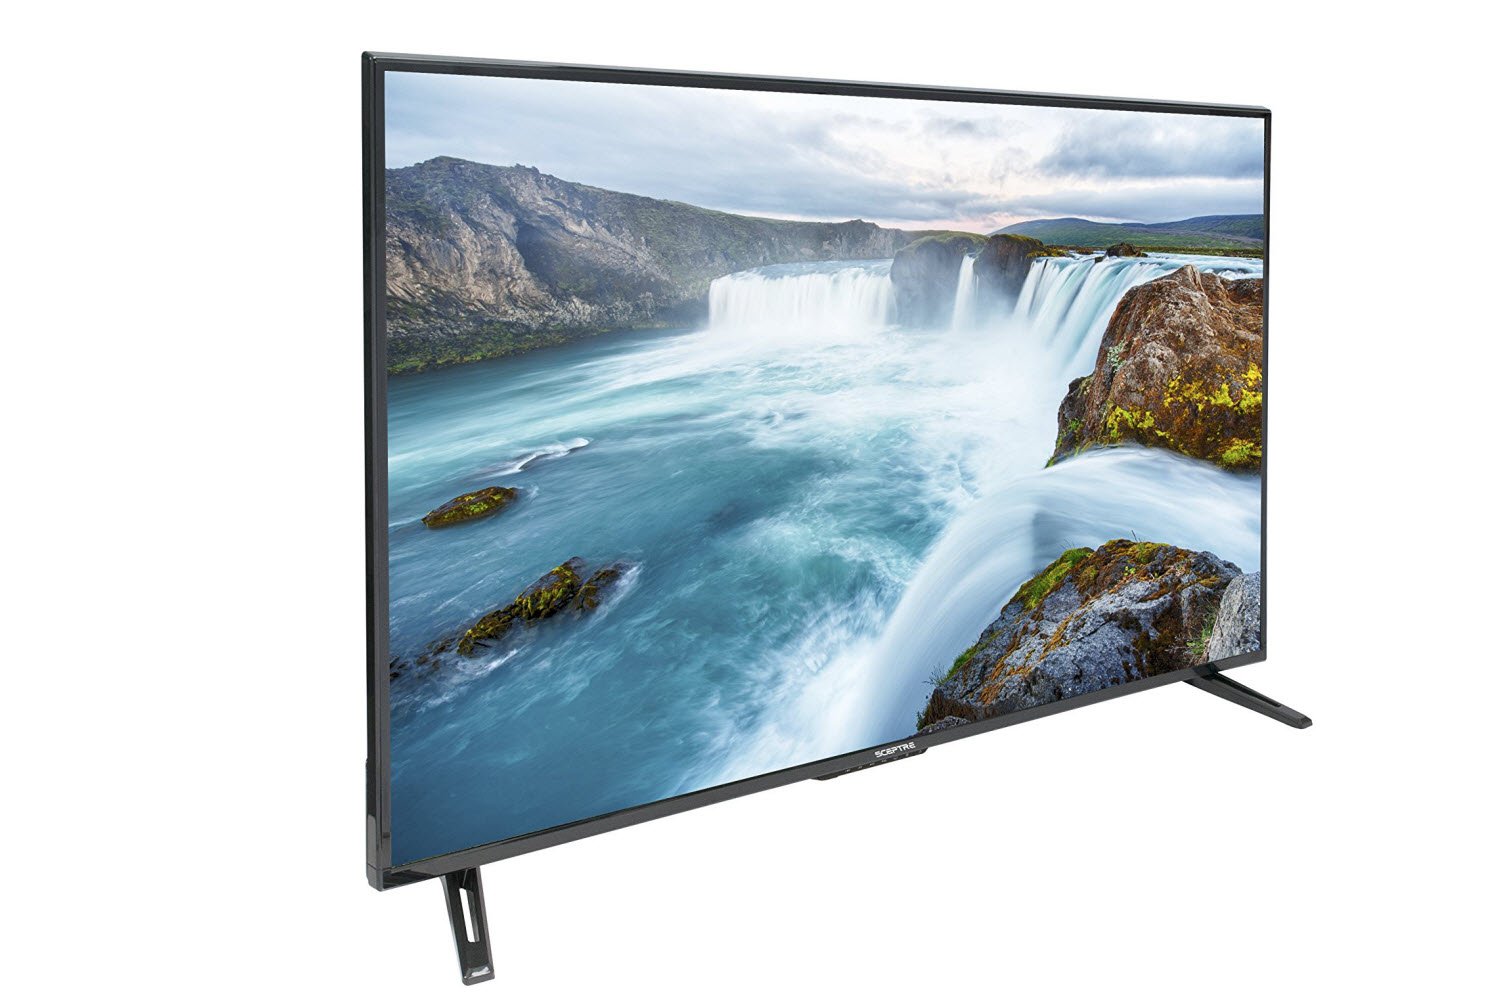 Sceptre 43 Inches 1080p LED TV X438BV-FSR (2017)